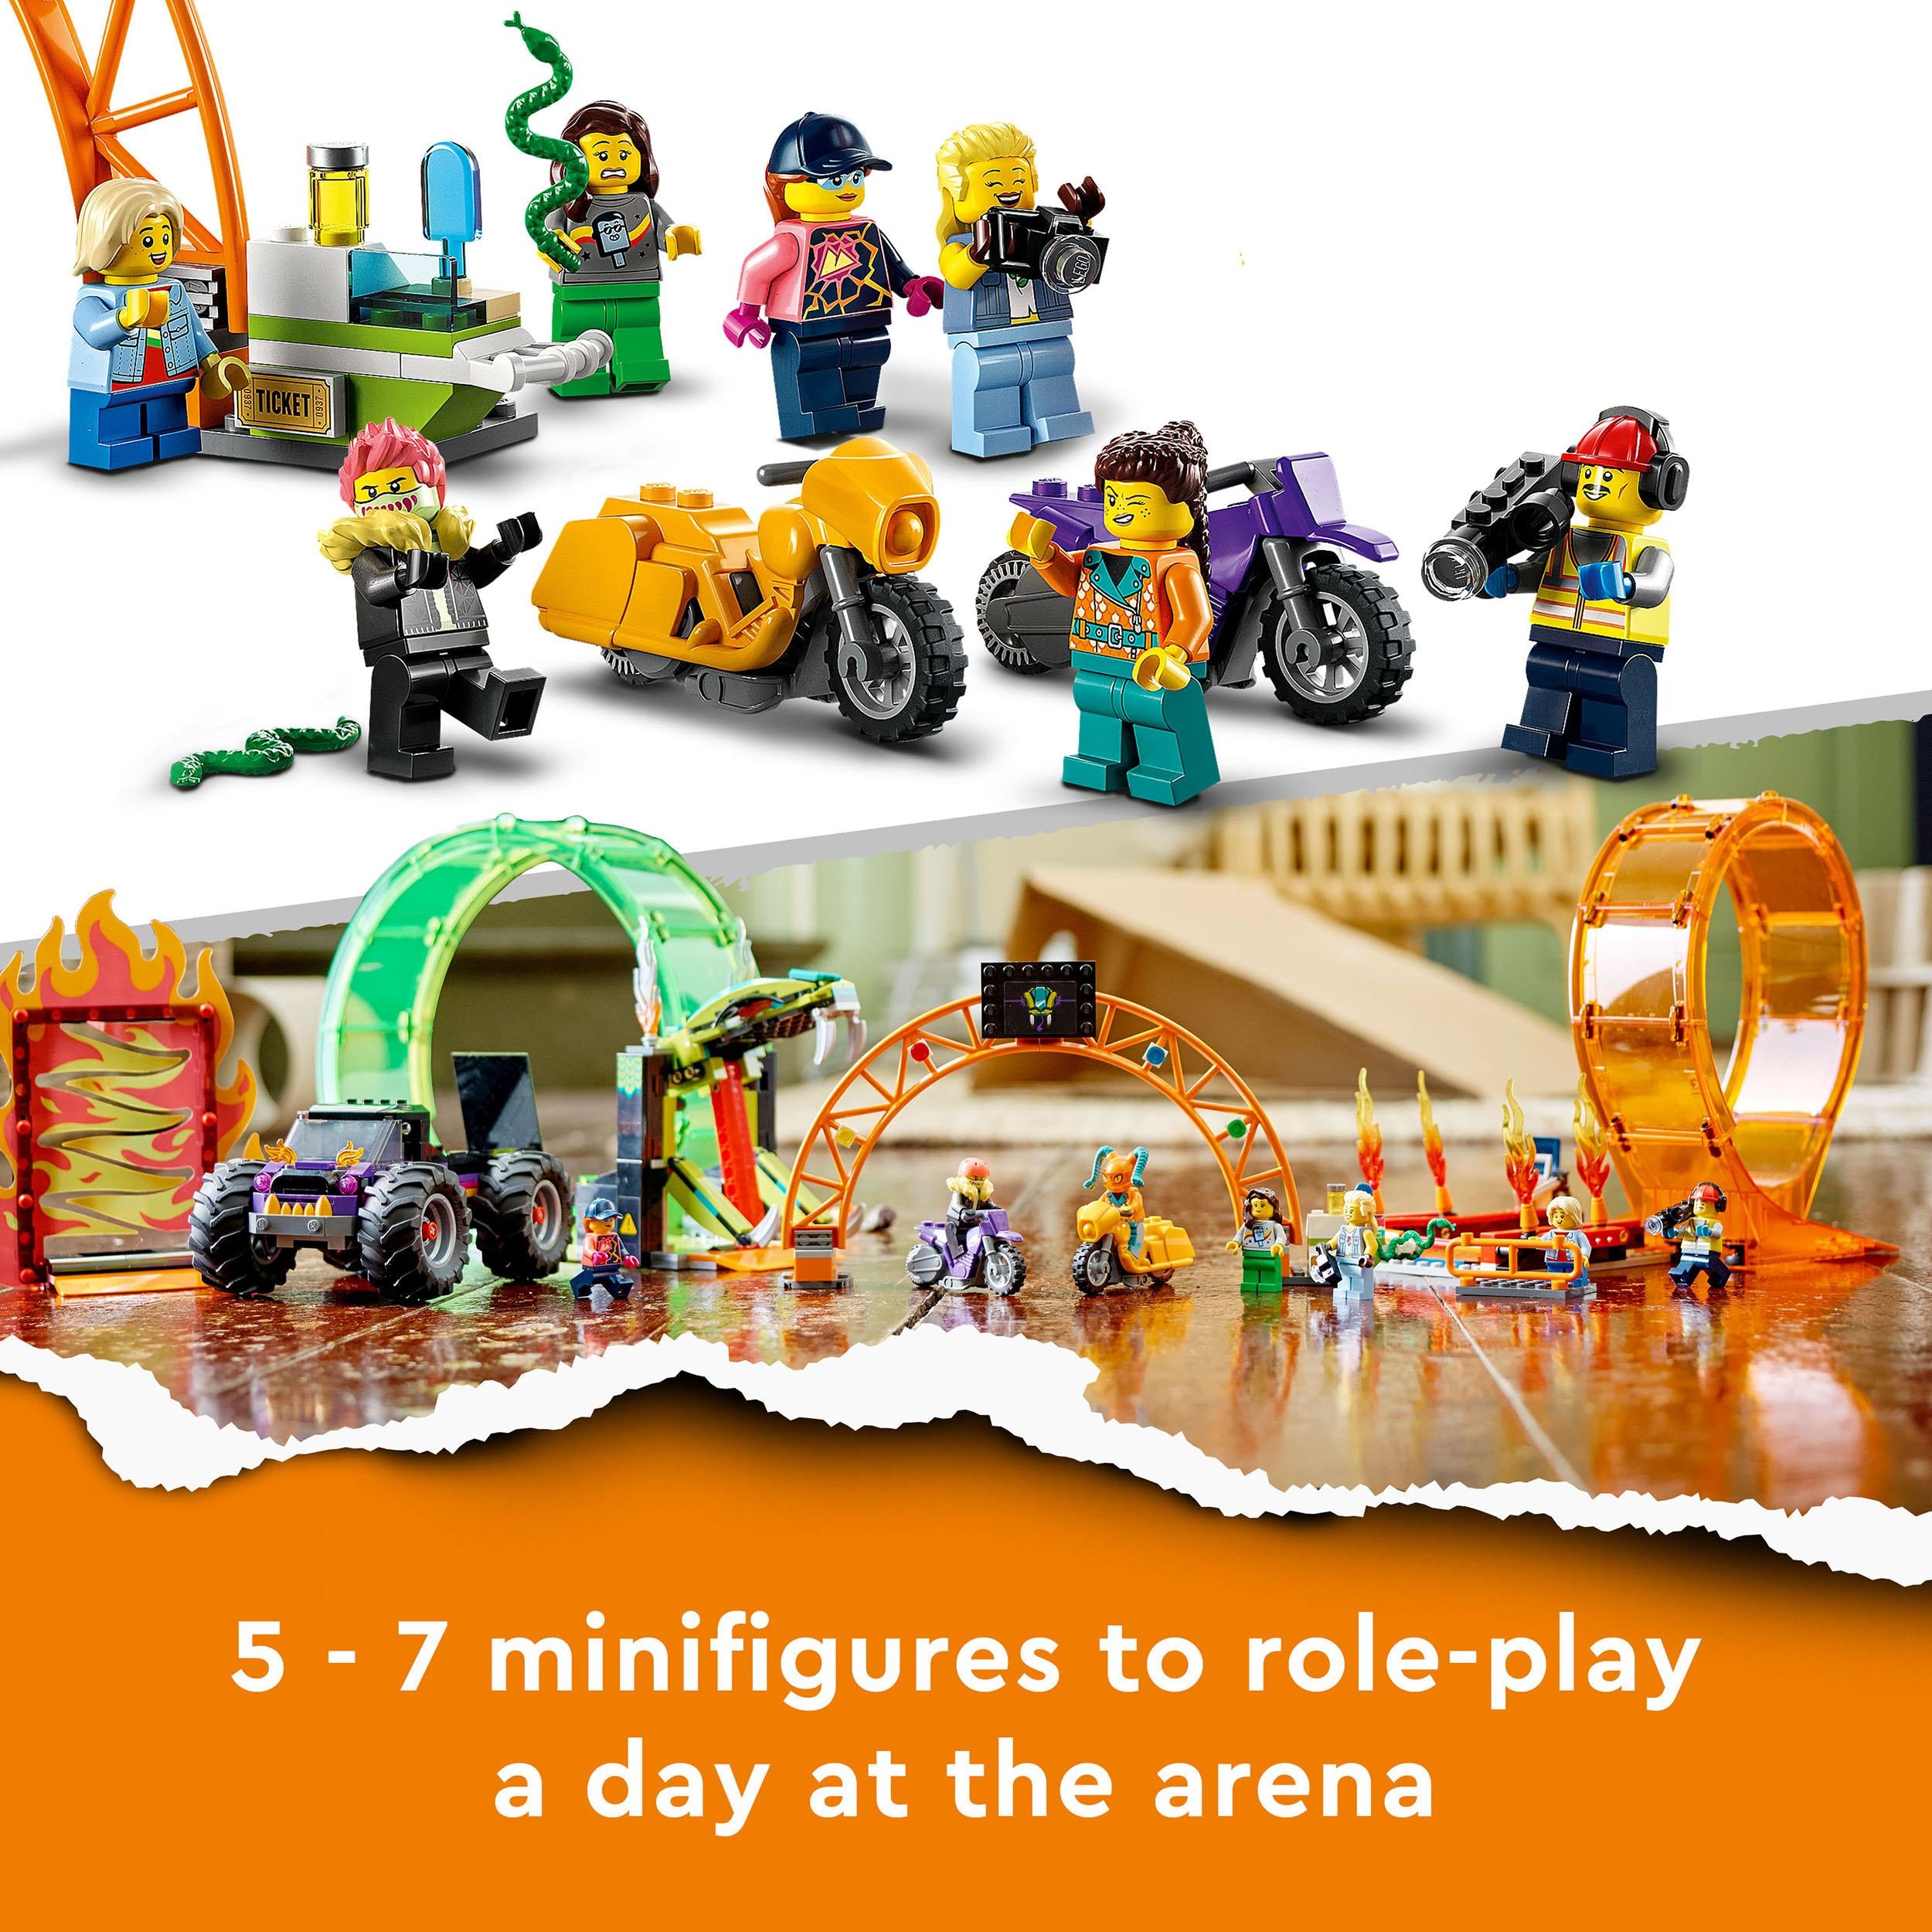 LEGO City Stuntz Double Loop Stunt Arena Motorbike Set 60339